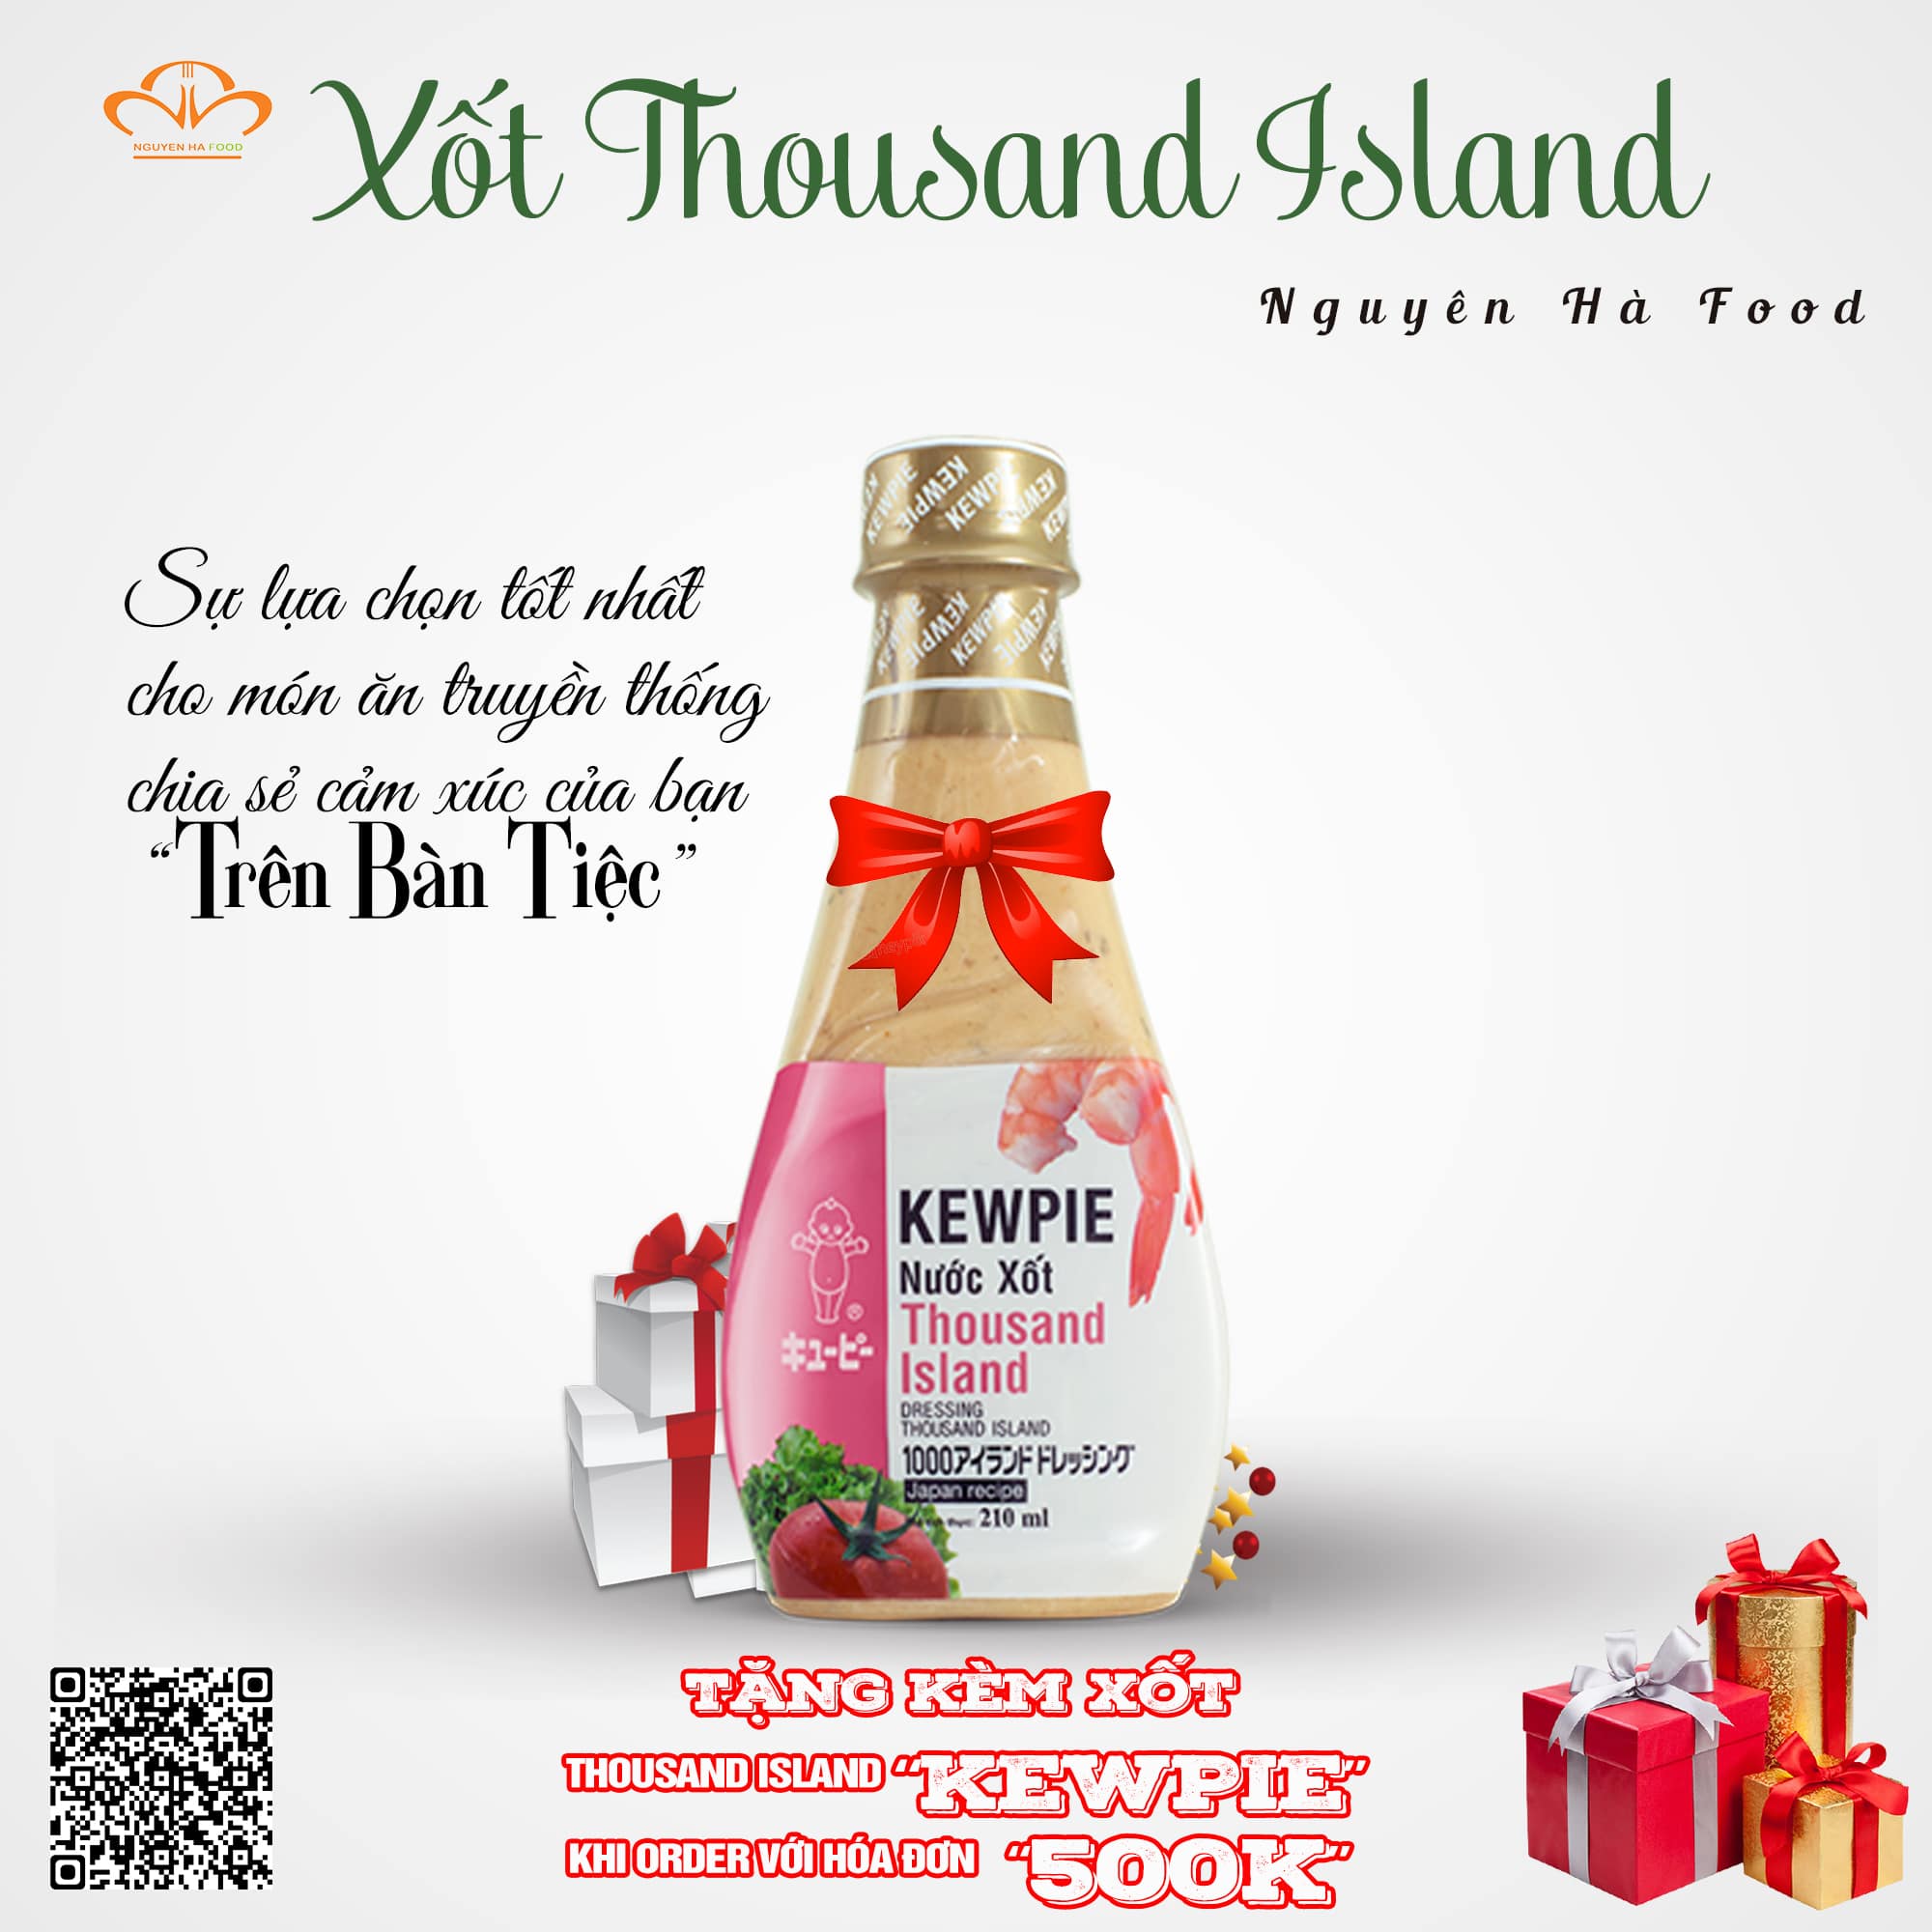 xot-thousand-island-kewpie